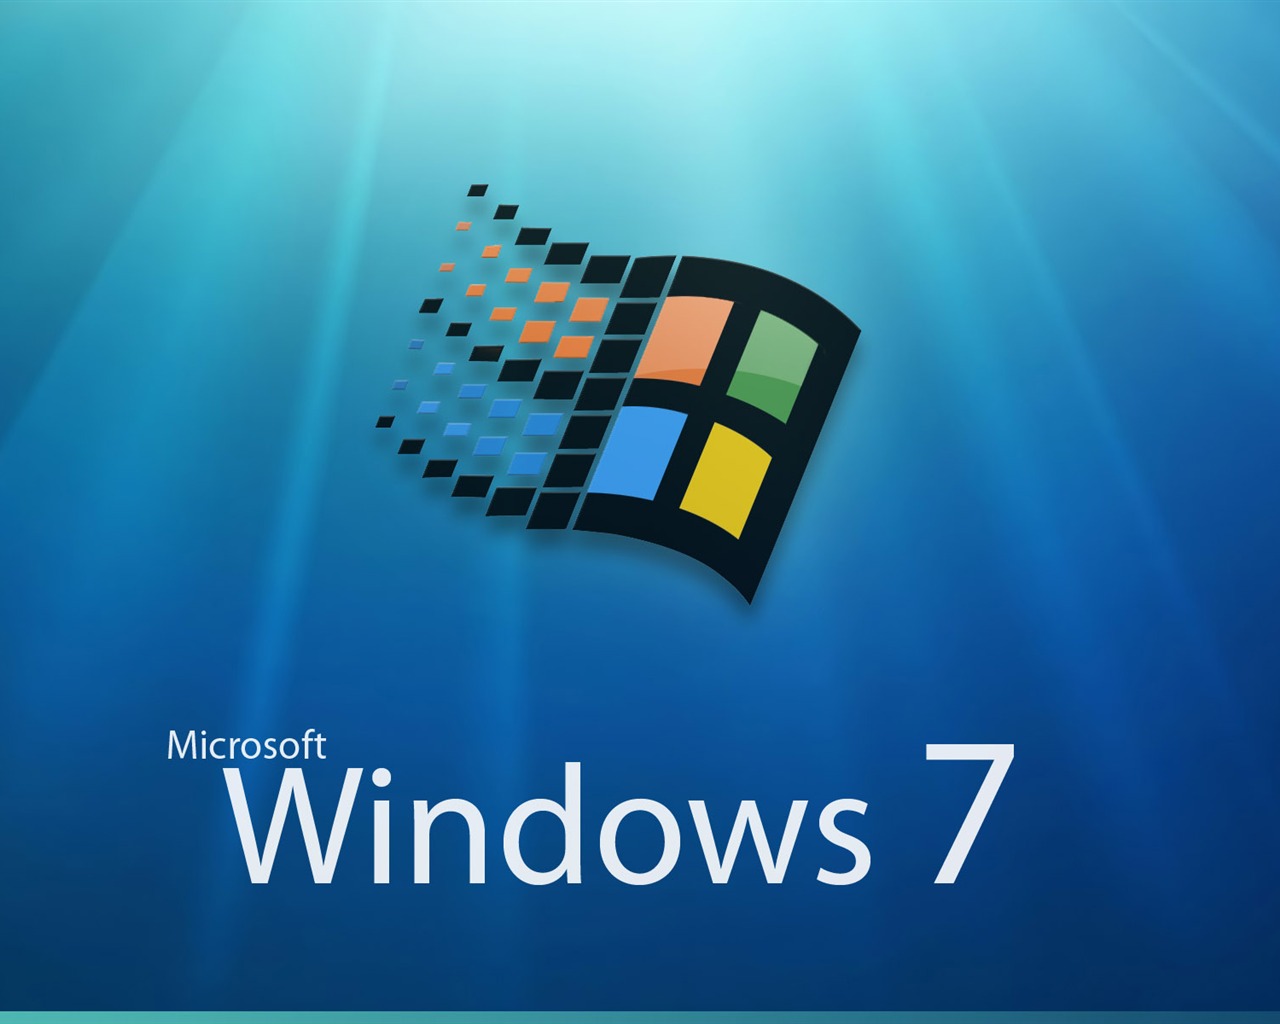 Fondos de escritorio de Windows7 #1 - 1280x1024